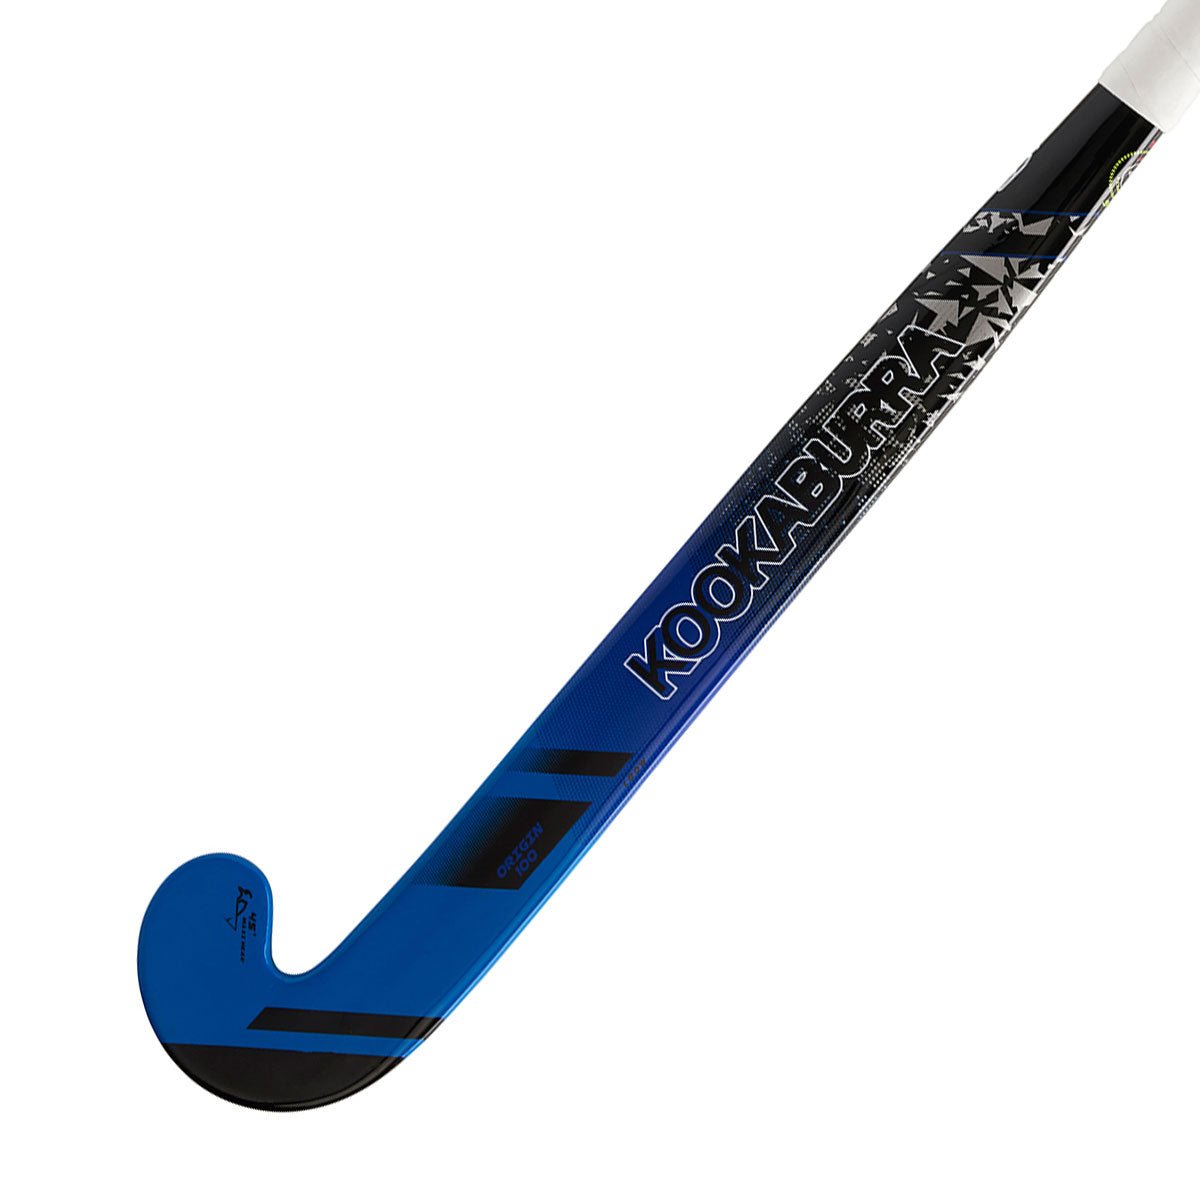 Kookaburra Origin 100 M-Bow (22) - Just Hockey